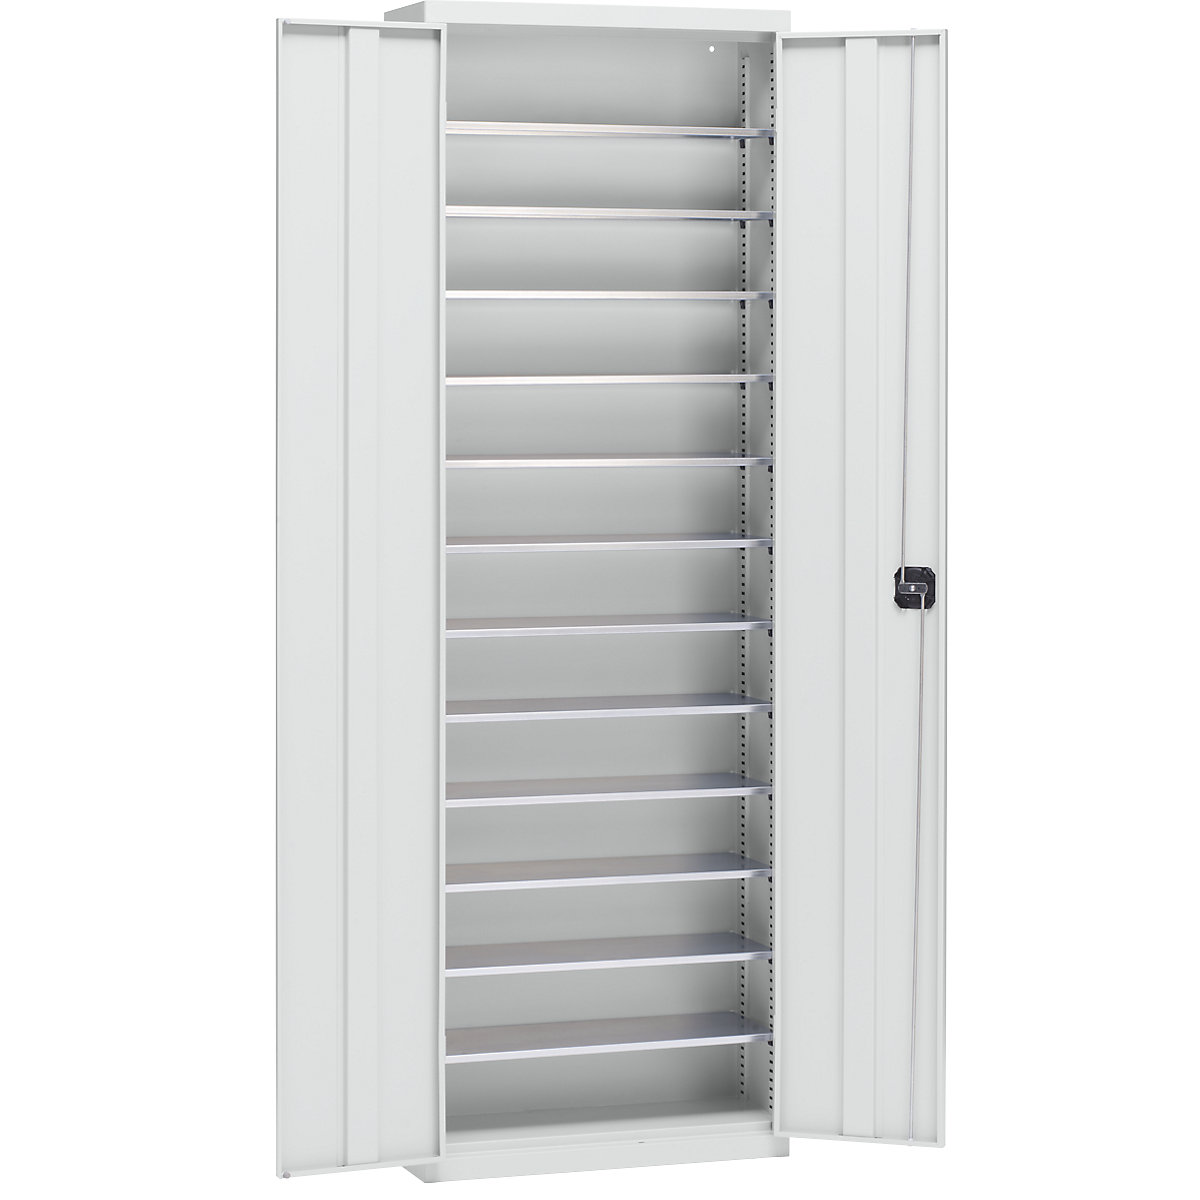 Storage cupboard made of sheet steel – eurokraft pro, height 2000 mm, light grey RAL 7035, 12 shelves-13